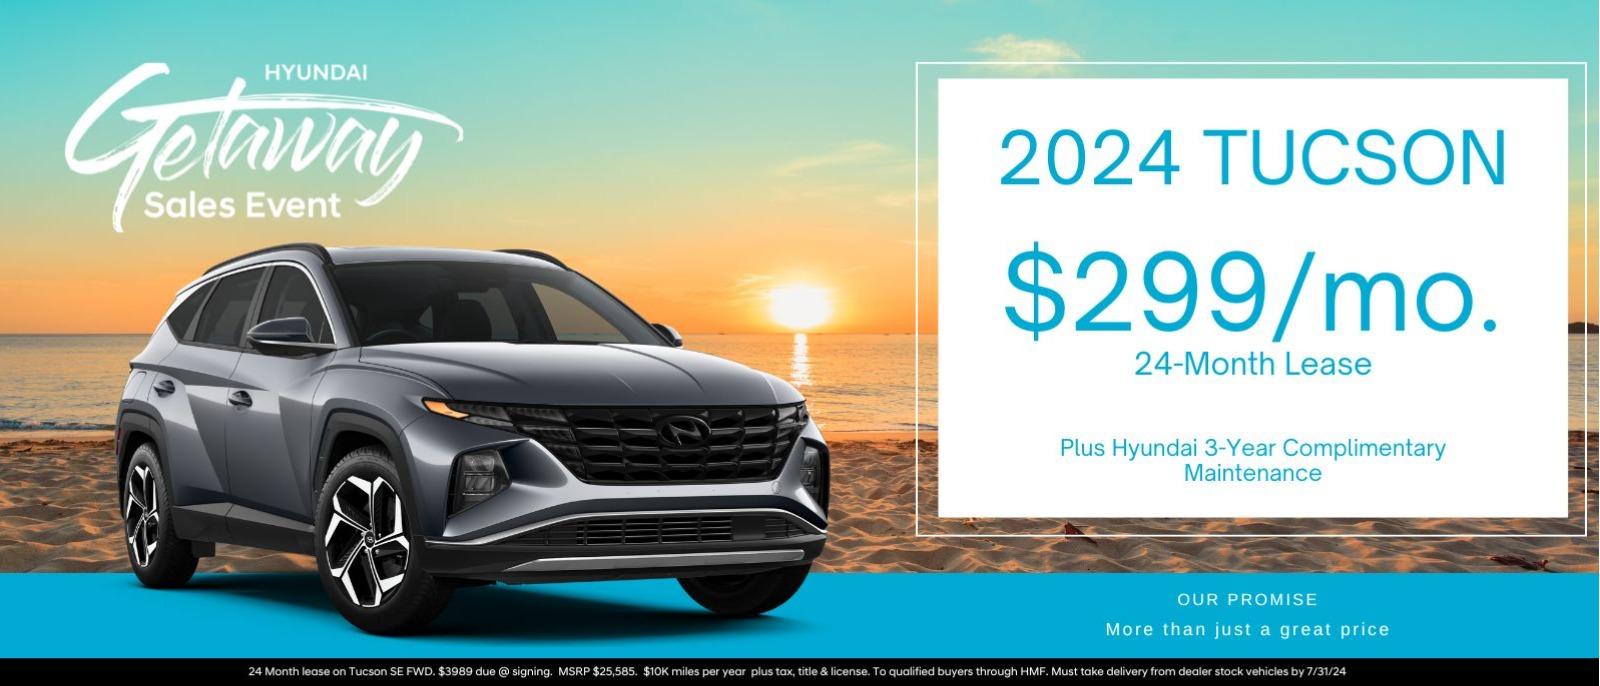 2024 Tucson 
$299/mo. 24-month Lease
Plus Hyundai 3--Year Complimentary Maintenance